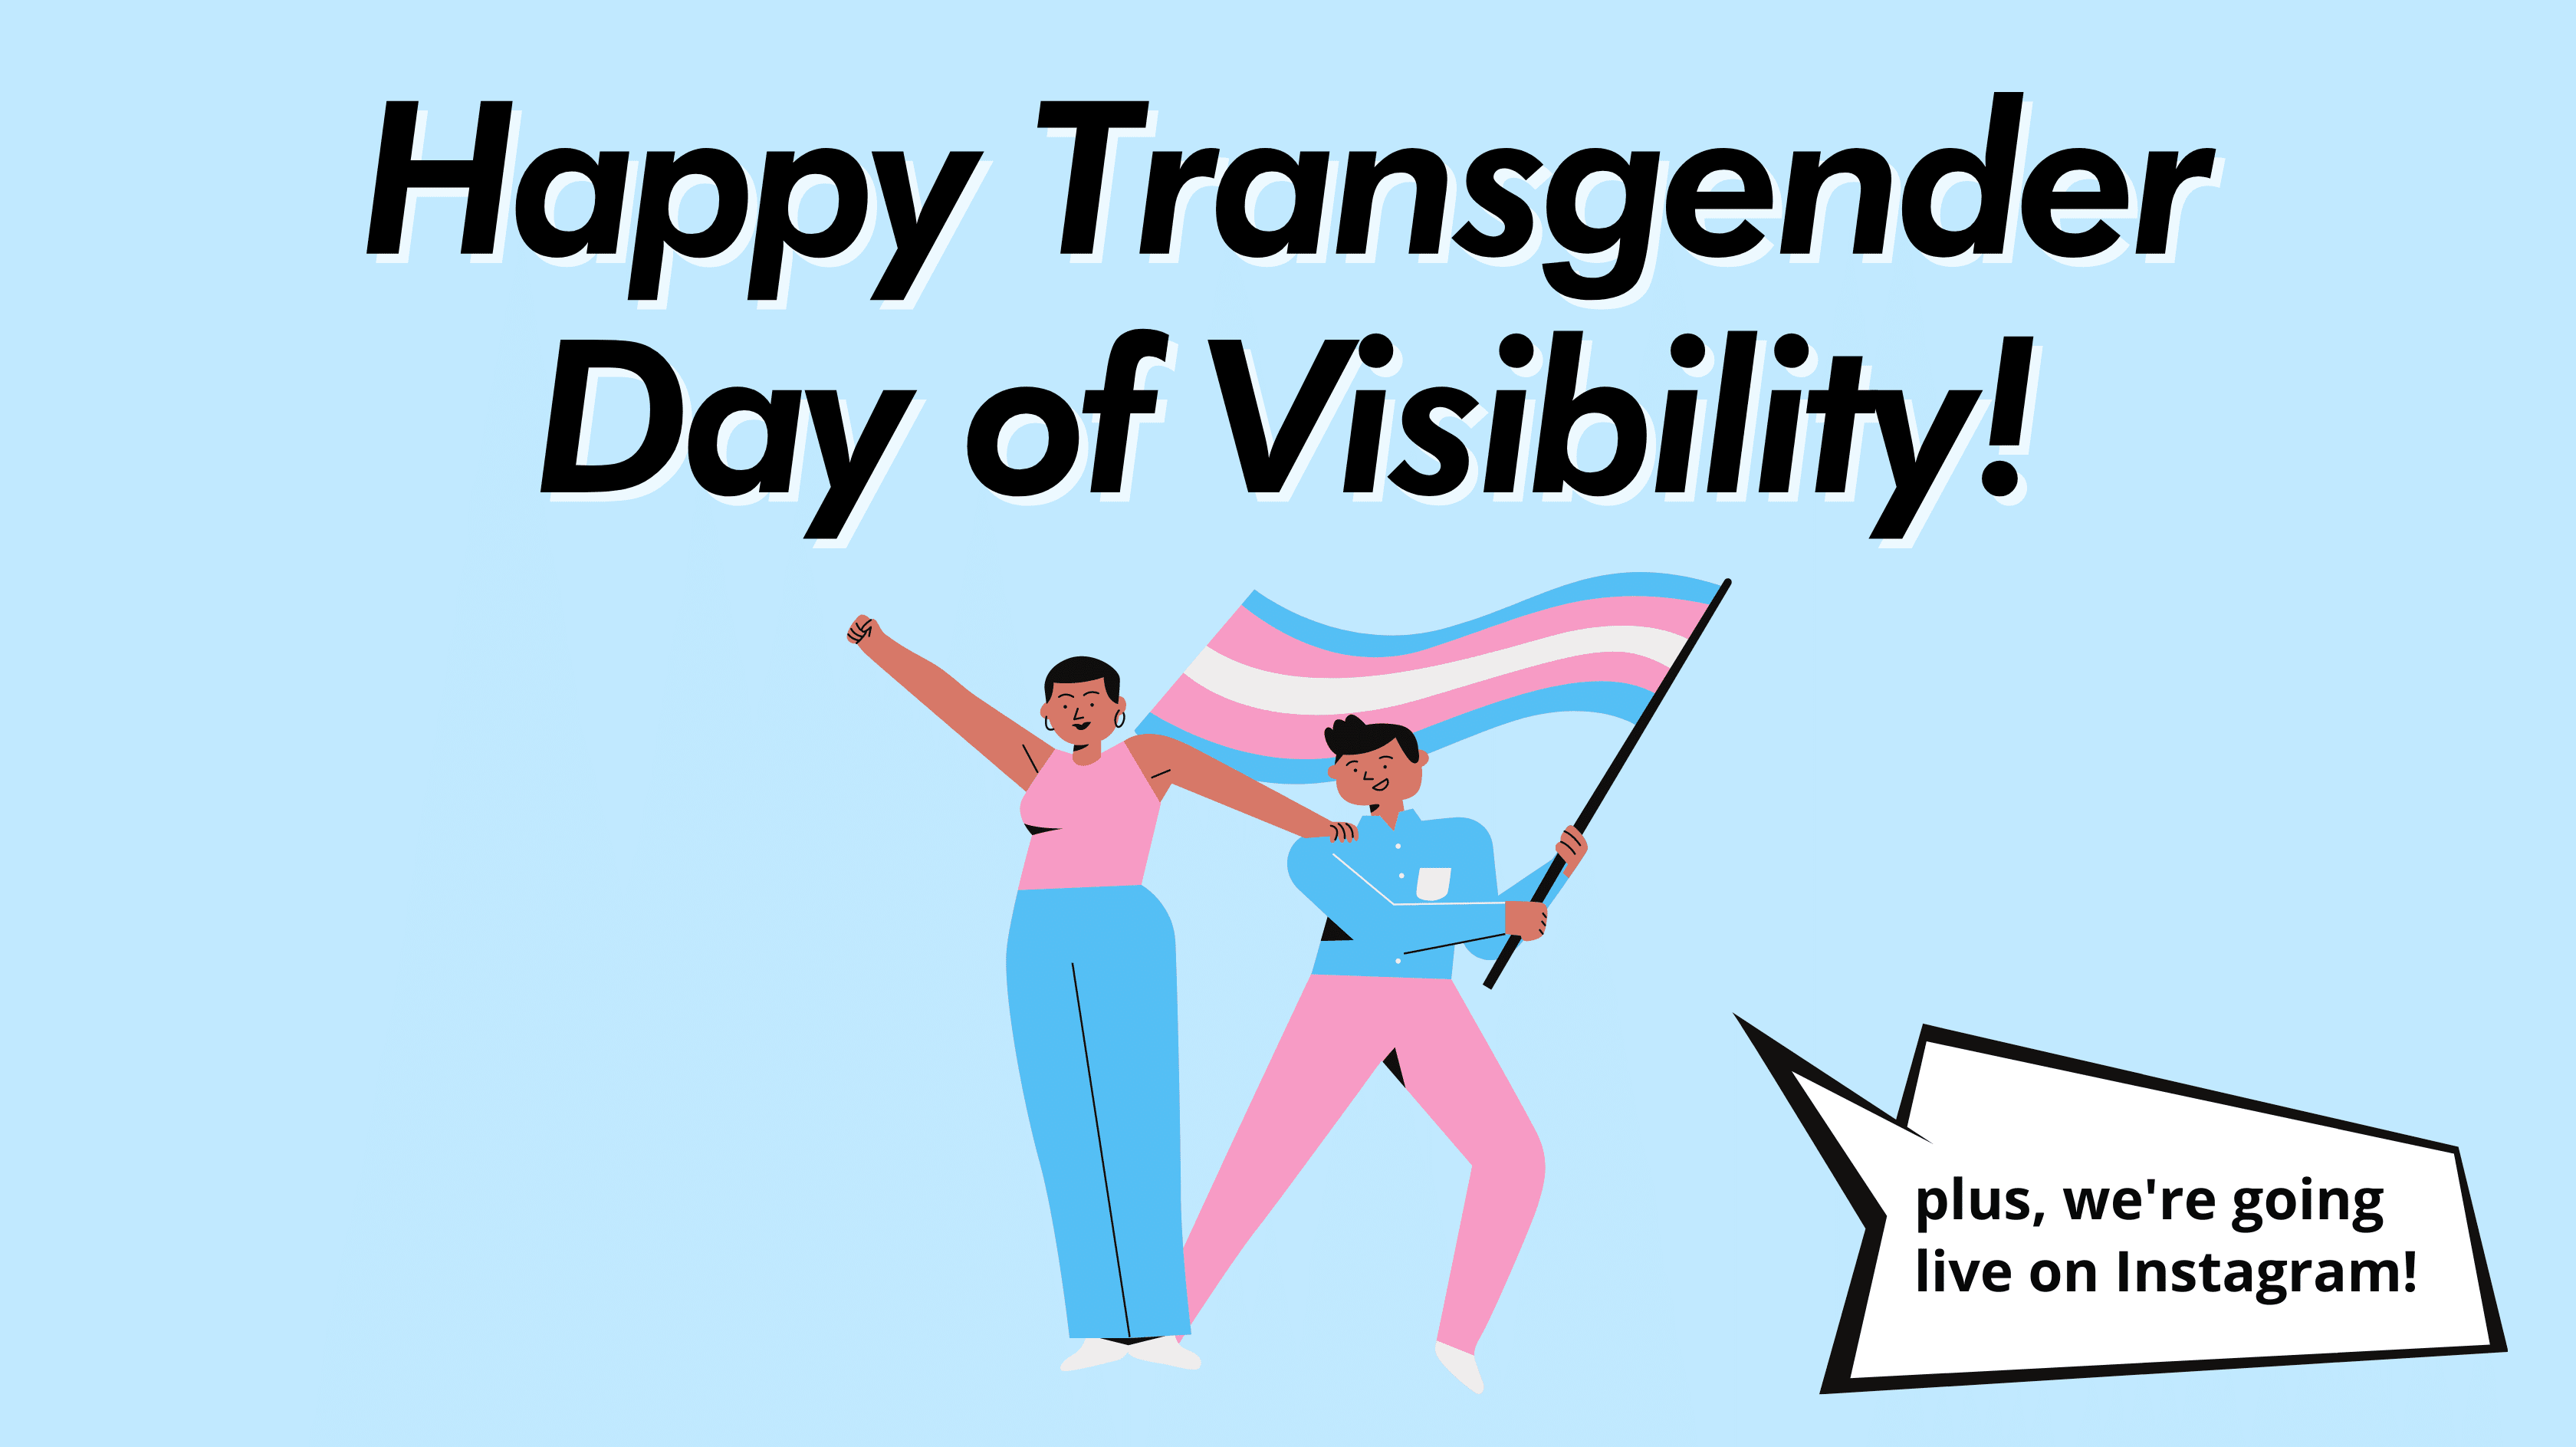 Happy Transgender Day of Visibility!